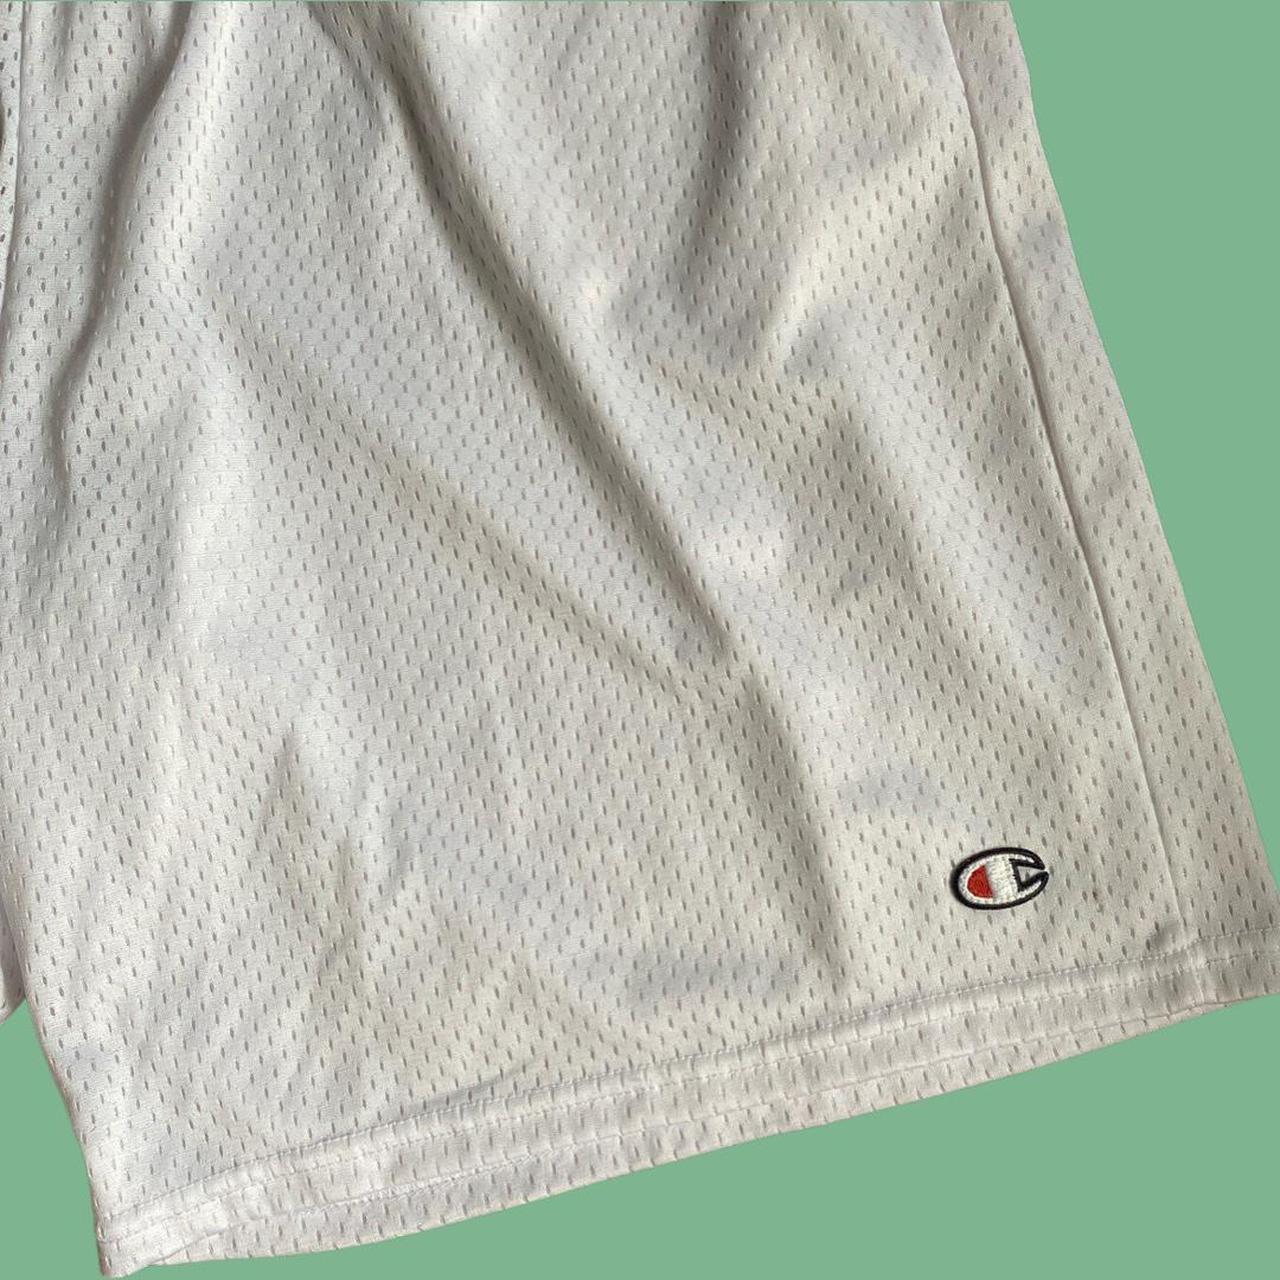 Product Image 2 - Champion mesh shorts 
100% polyester